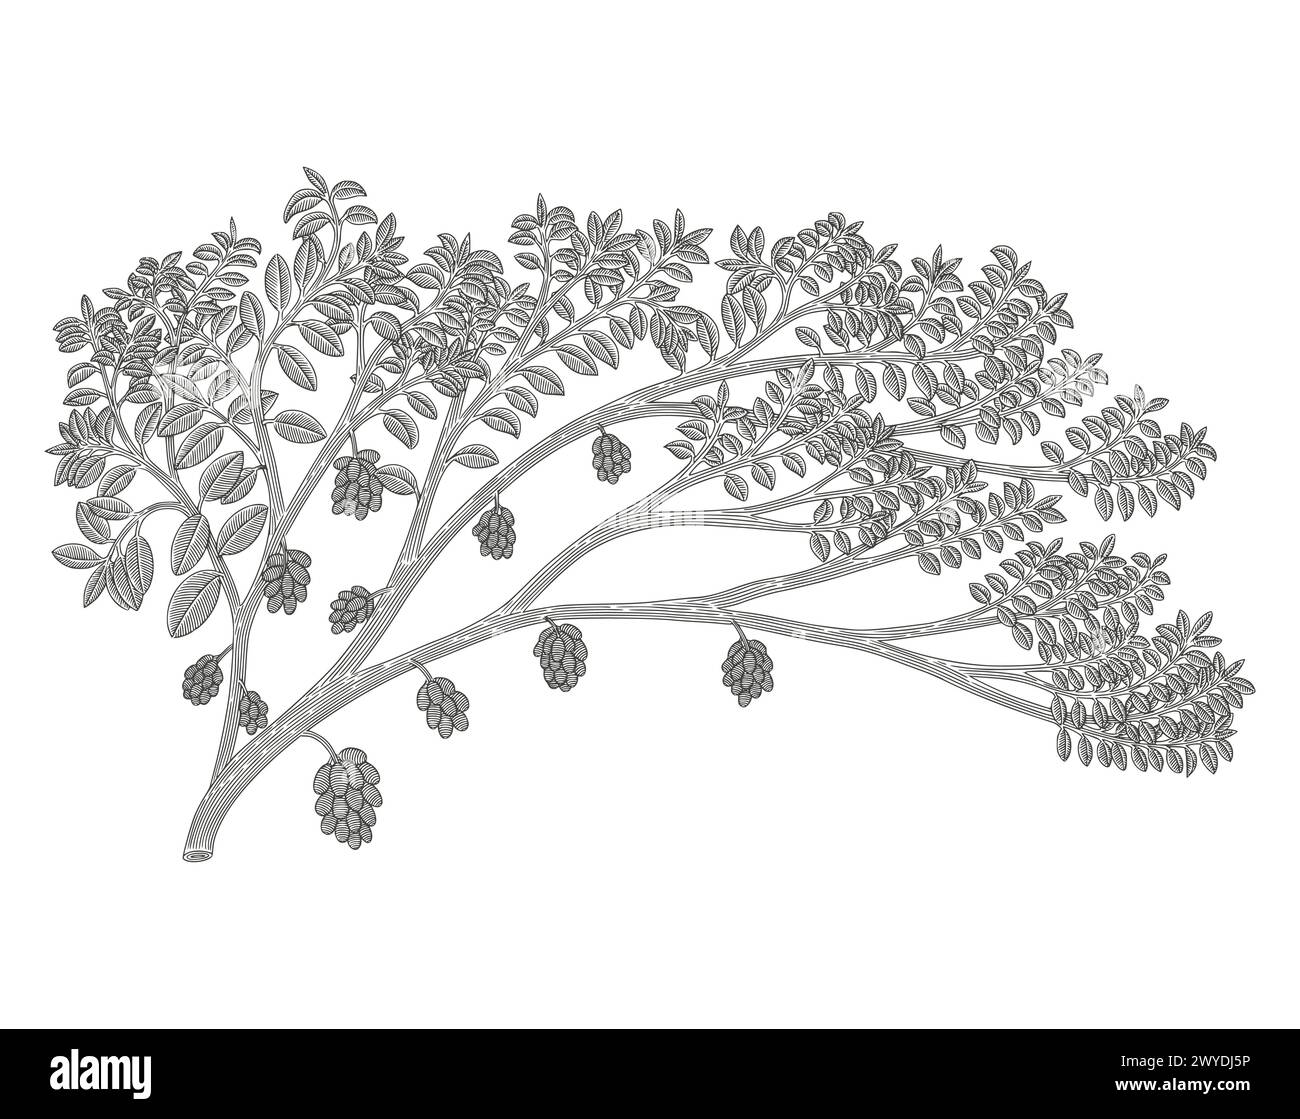 Jamblang or java plum tree, Syzygium cumini, Vintage engraving drawing style illustration Stock Vector